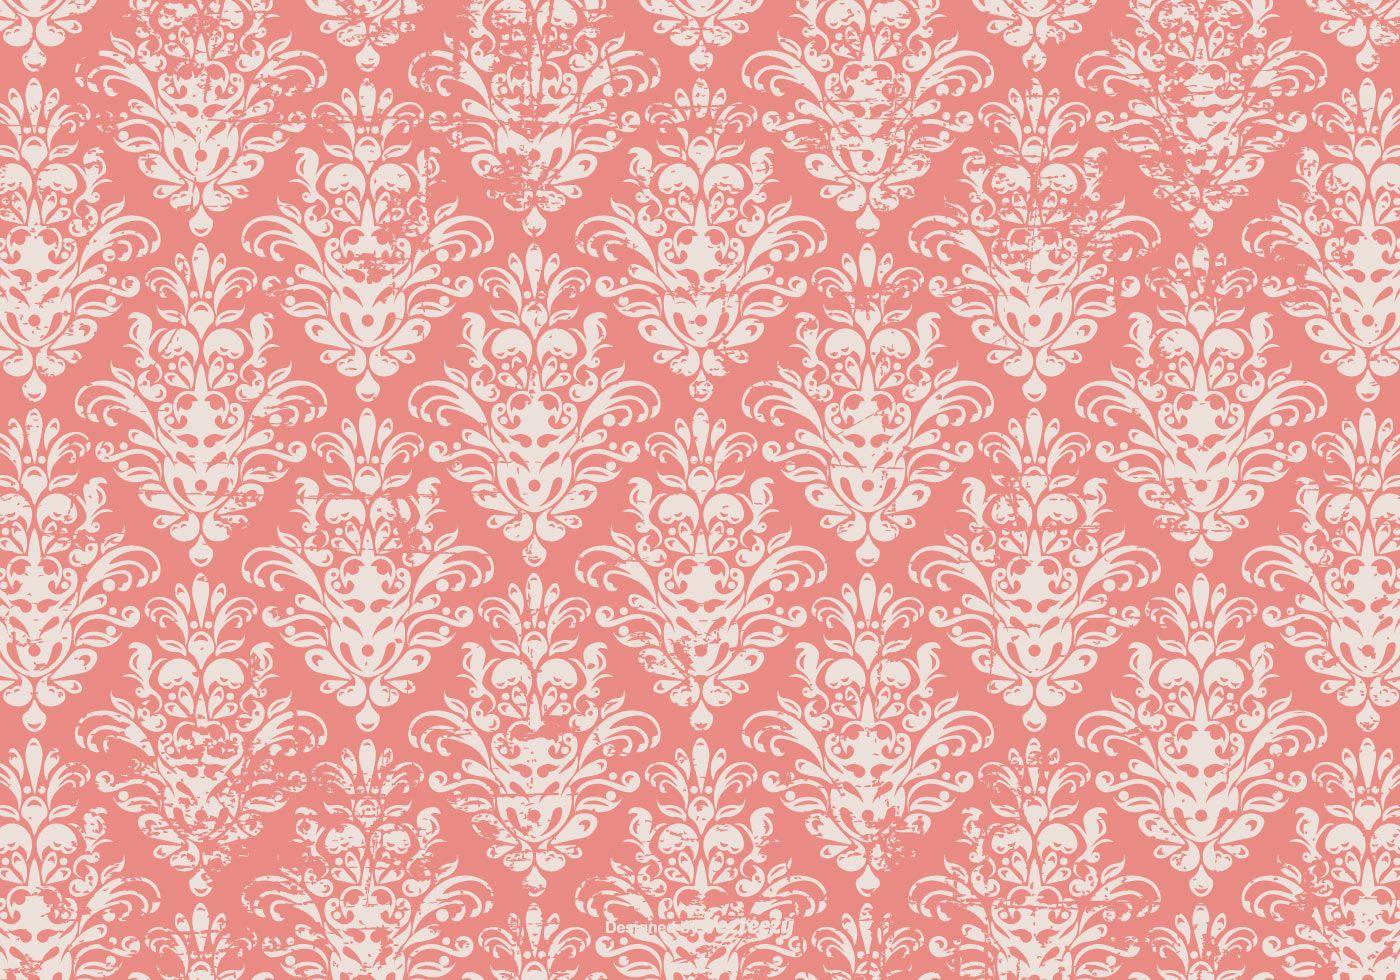 Pink Grunge Damask Background Free Vector Art, Stock